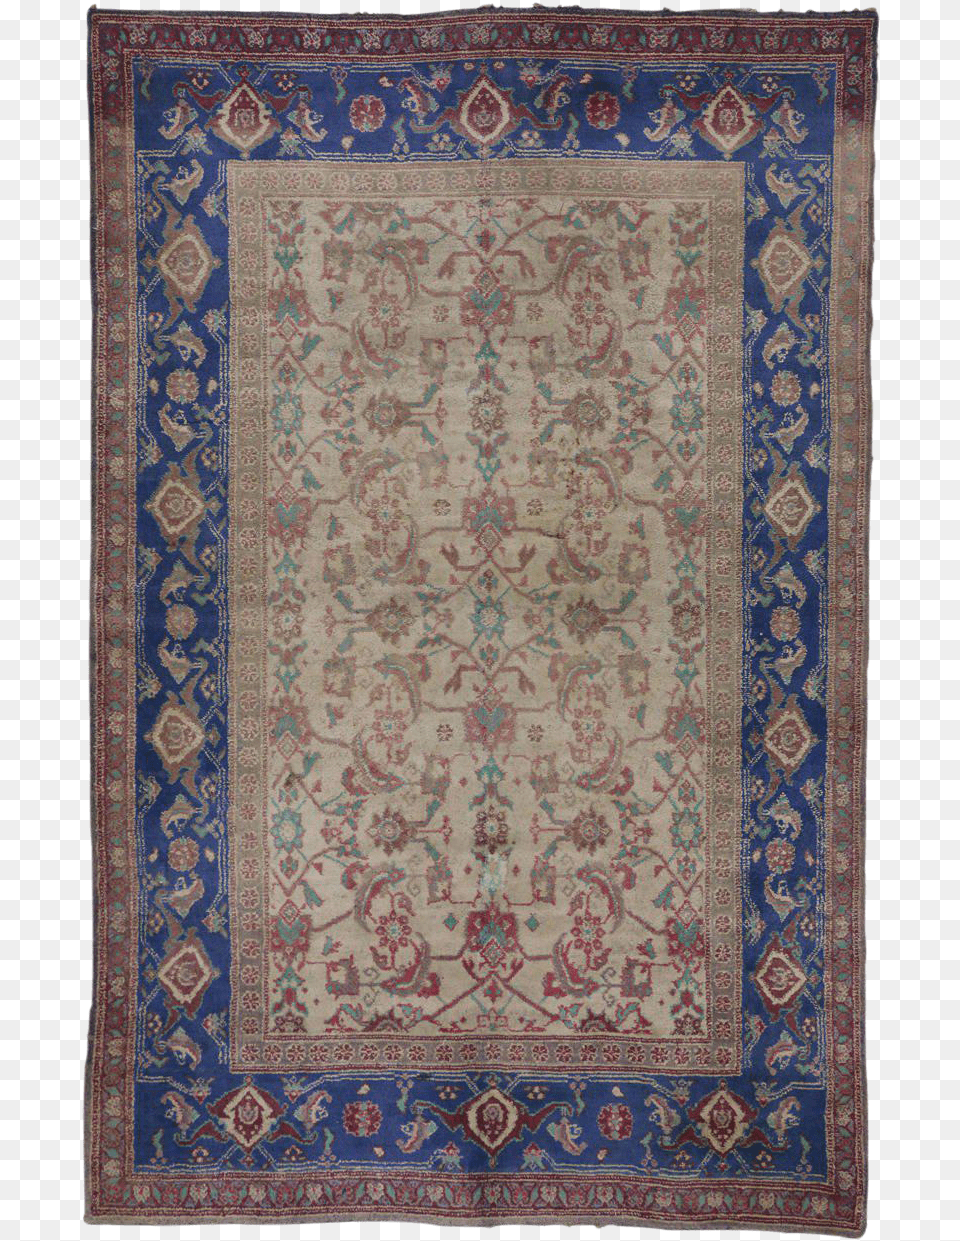 Antique Cotton Indian Agra Carpet With Blue Border Carpet, Home Decor, Rug Png Image